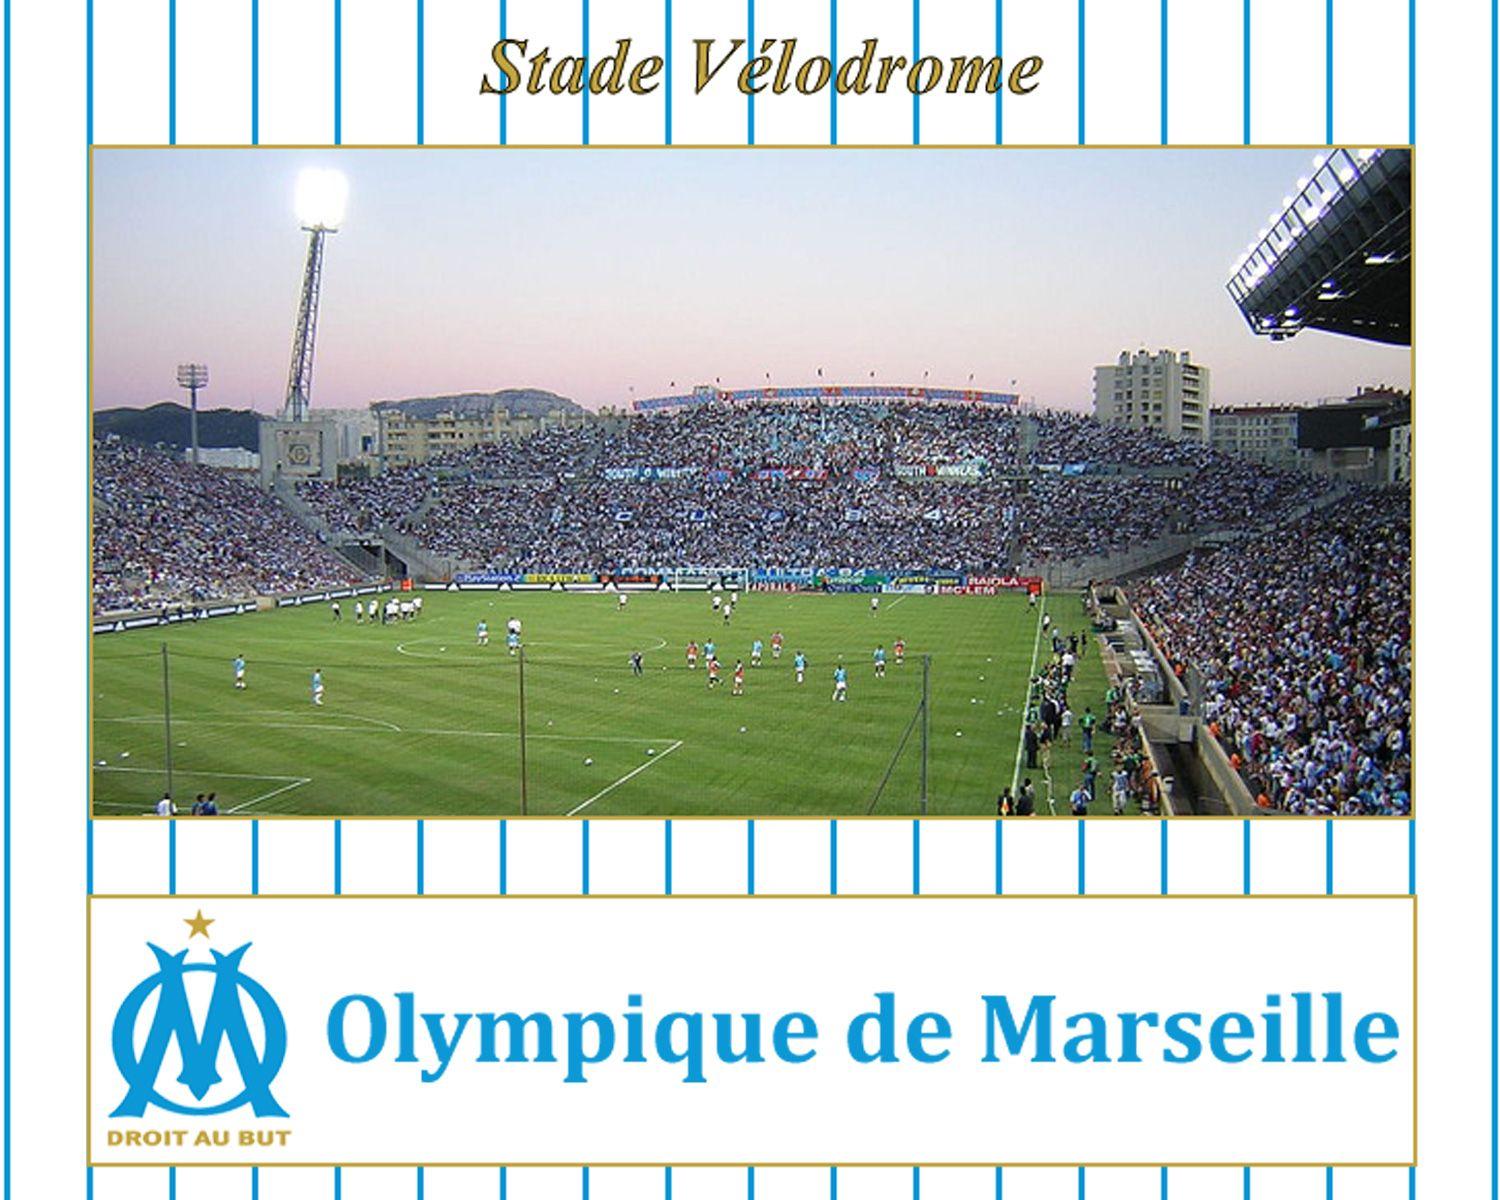 Olympique de Marseille wallpaper. Free soccer wallpaper